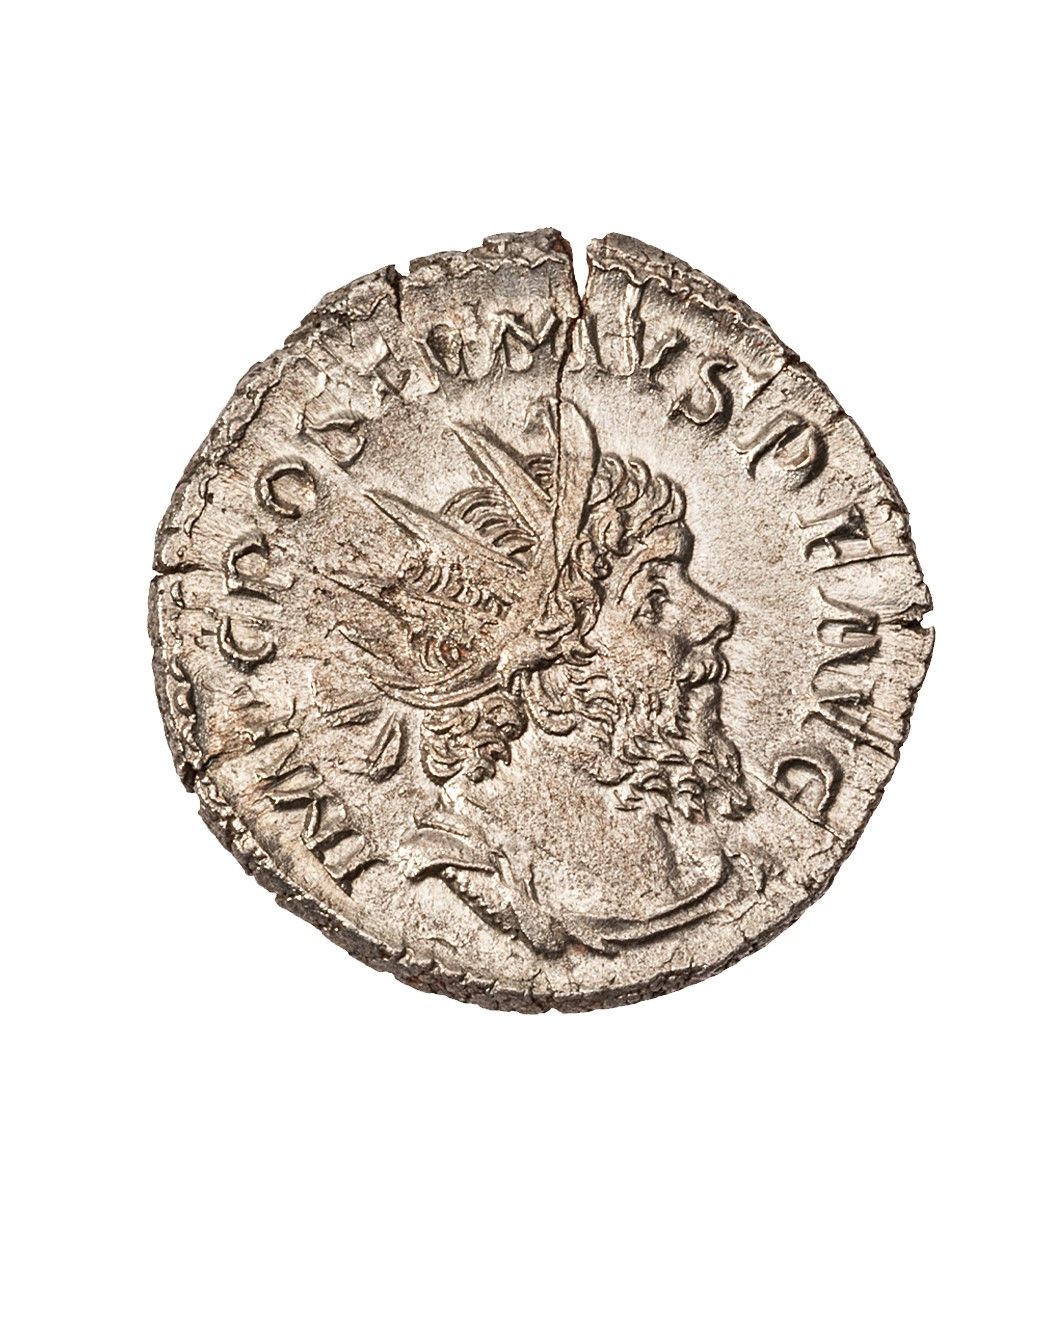 Null POSTUME 

Antoninien 

R/ VIRTUTI AUGUSTI Hercule debout à droite tenant un&hellip;